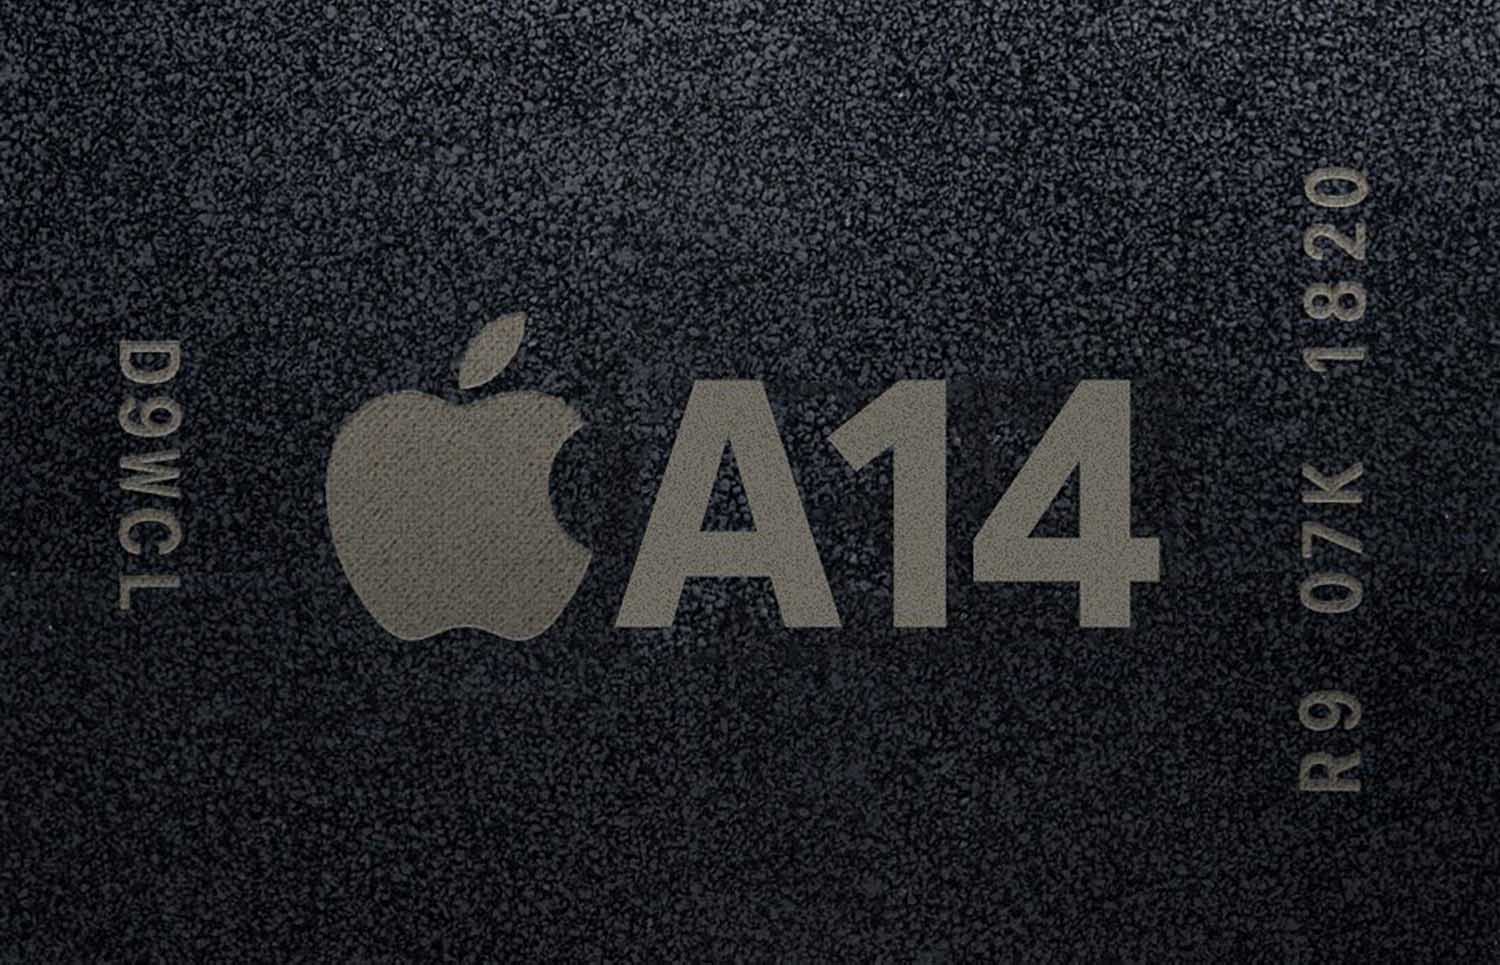 apple a14